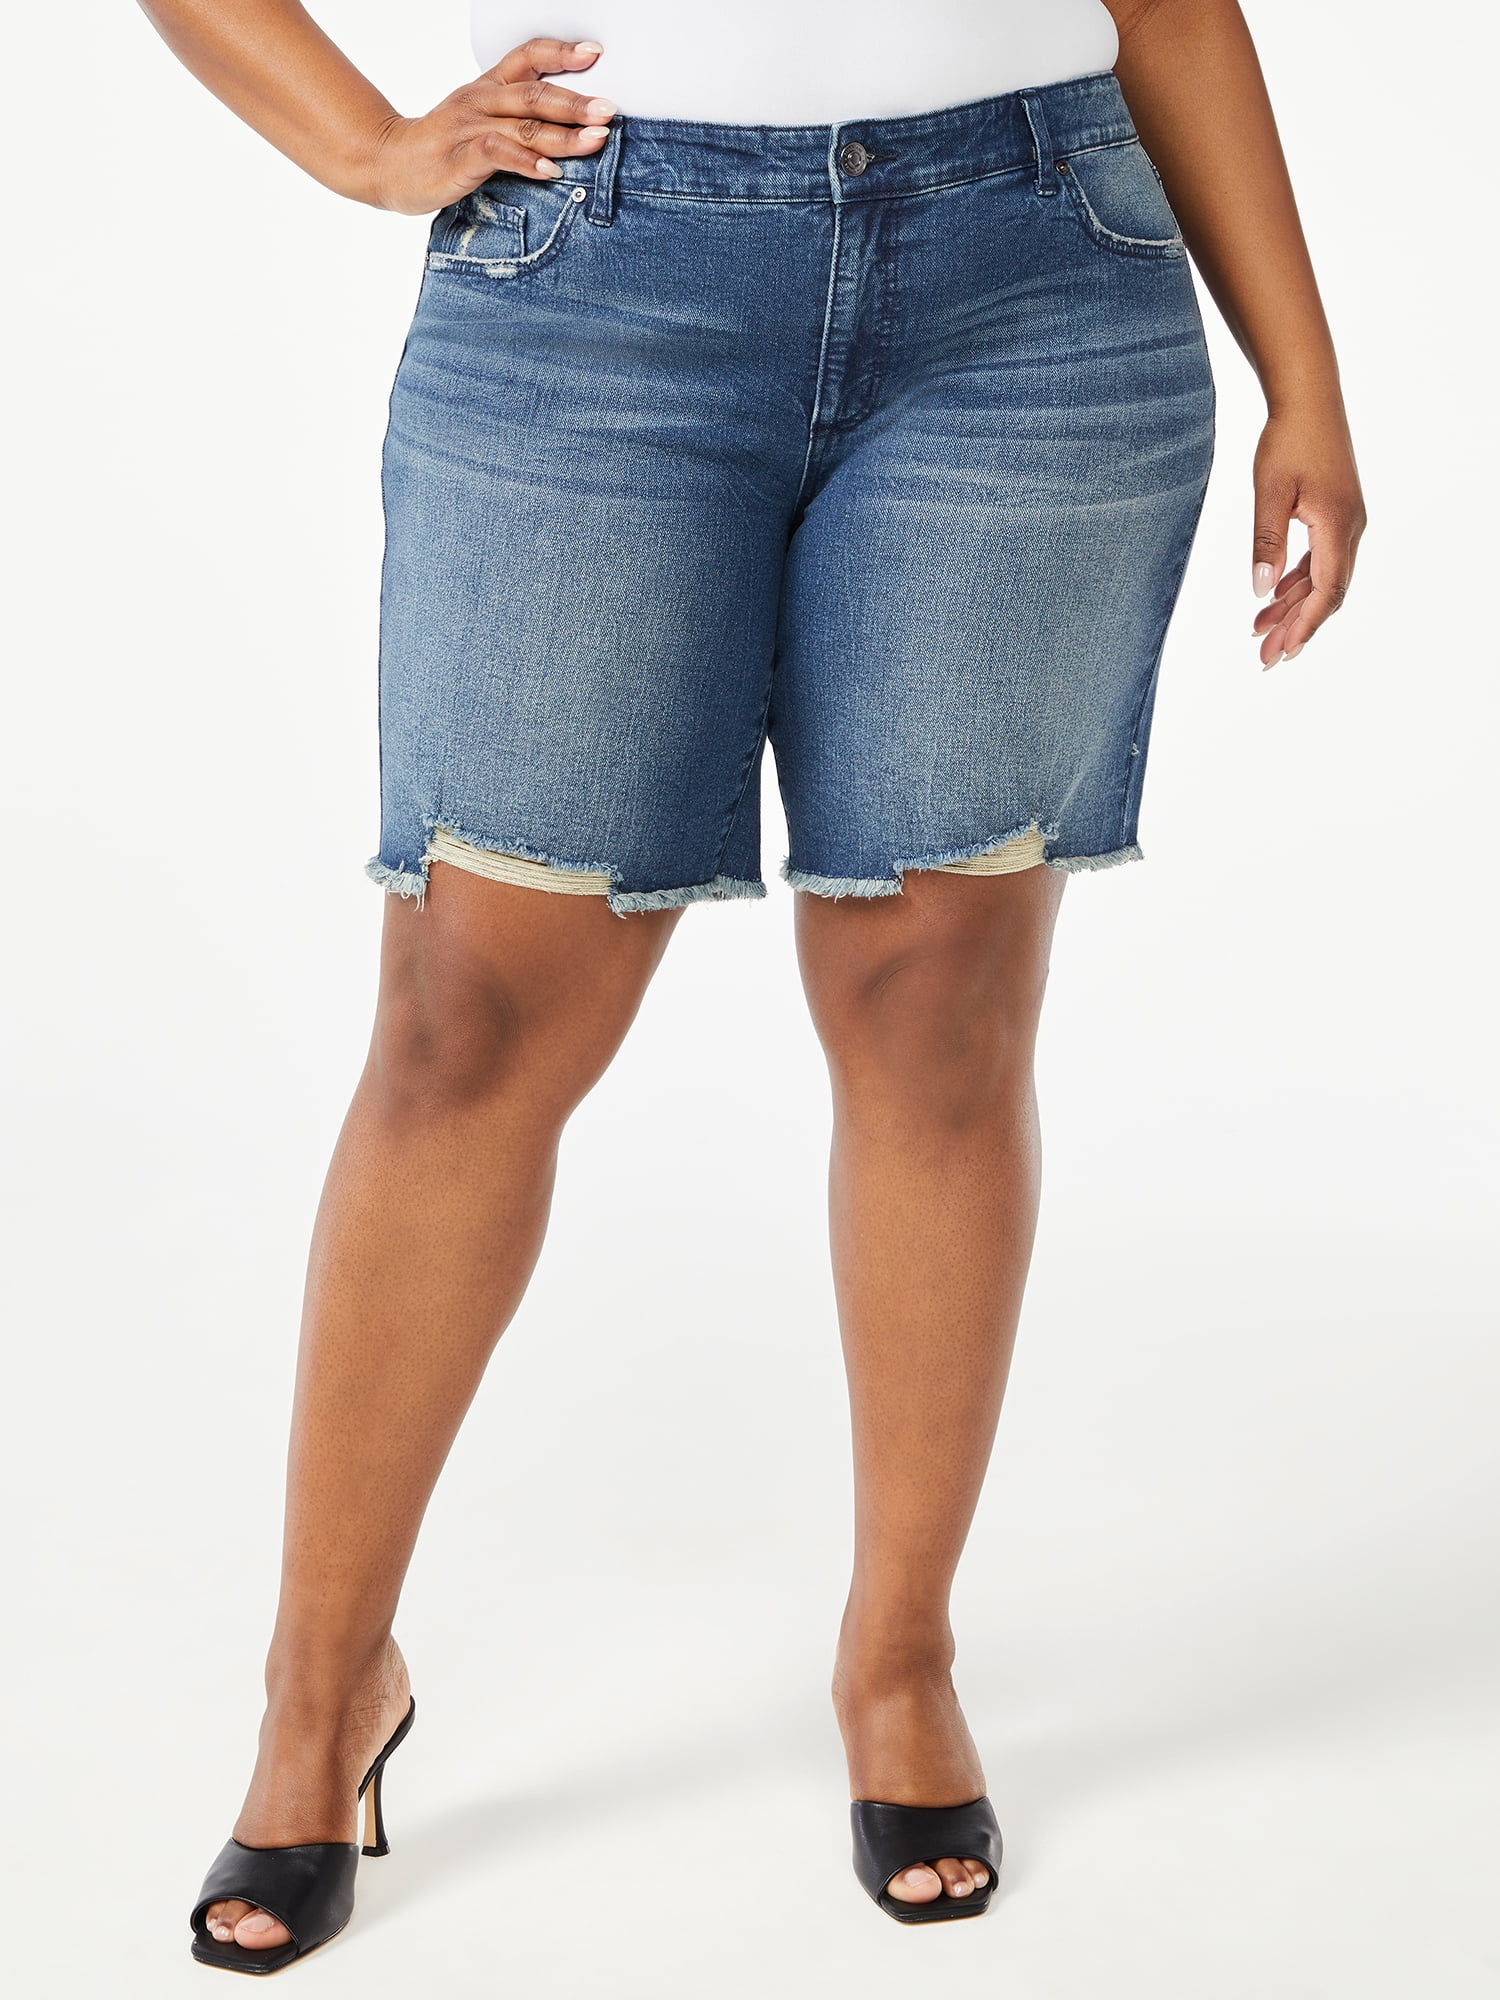 Women Mid Rise Stretchy Denim Shorts Knee Length Curvy Bermuda Stretch Short  Jeans, Off white, Medium - Walmart.com